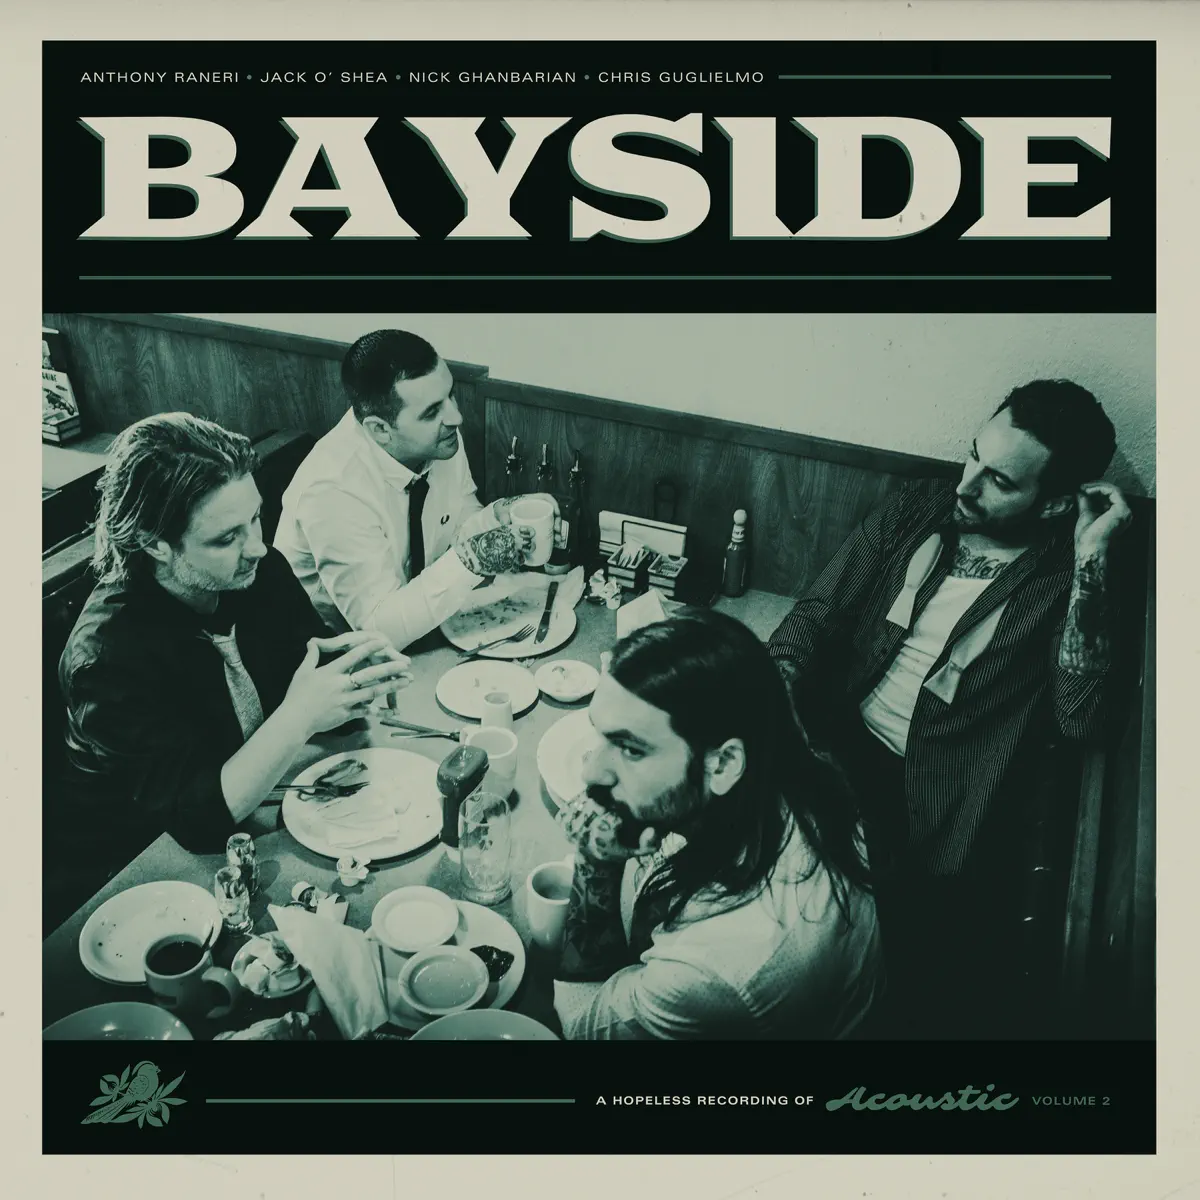 Bayside - Acoustic / Acoustic, Vol. 2 / Acoustic Volume 3 - EP [iTunes Plus AAC M4A]-新房子